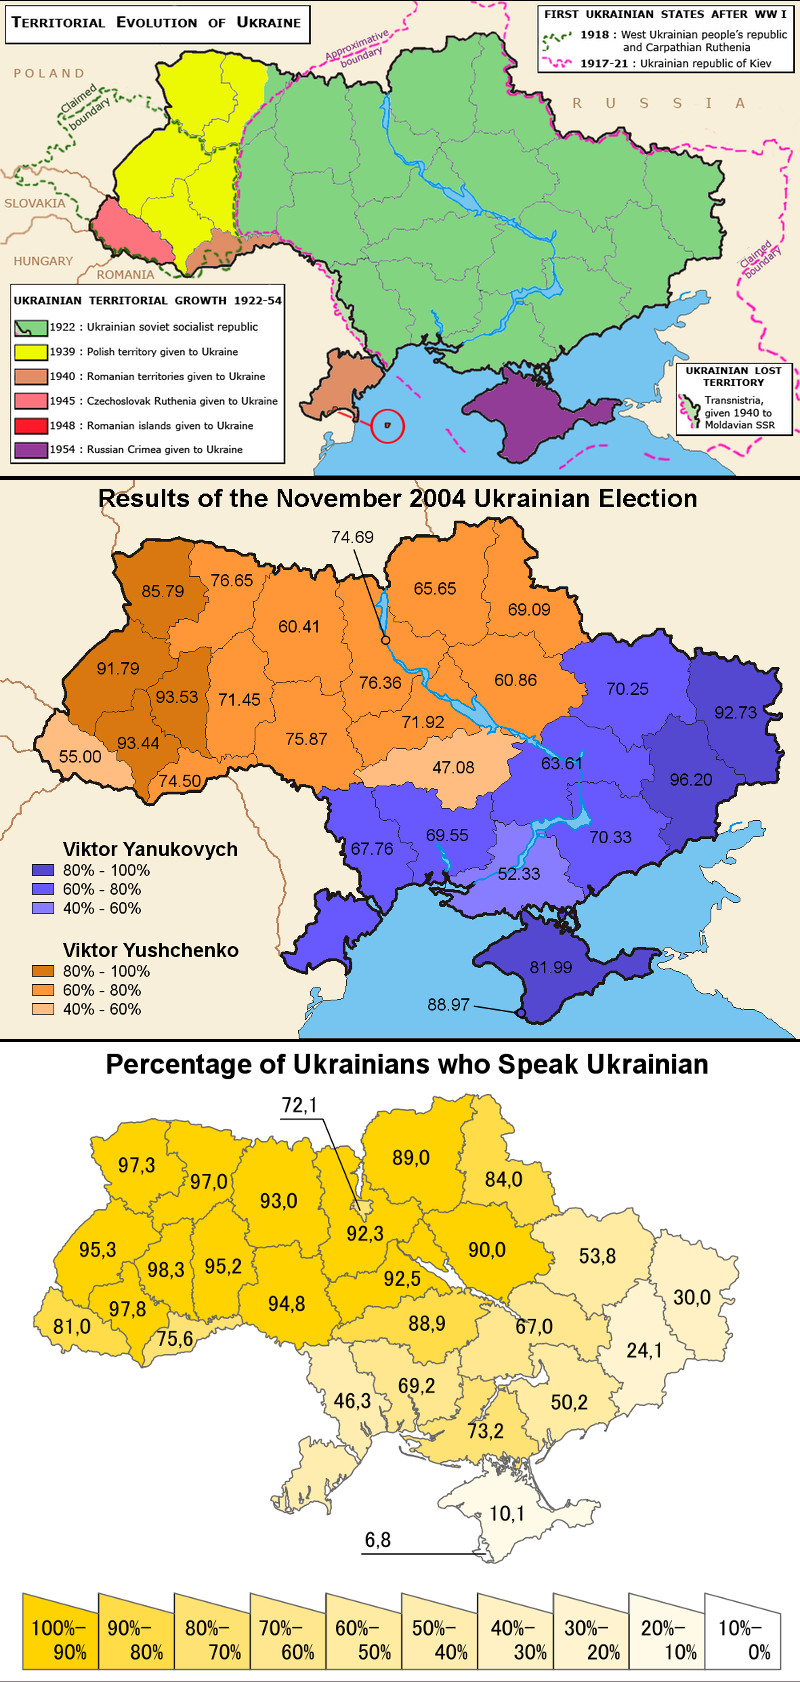 ukrainian-ethno-political-divide.jpg